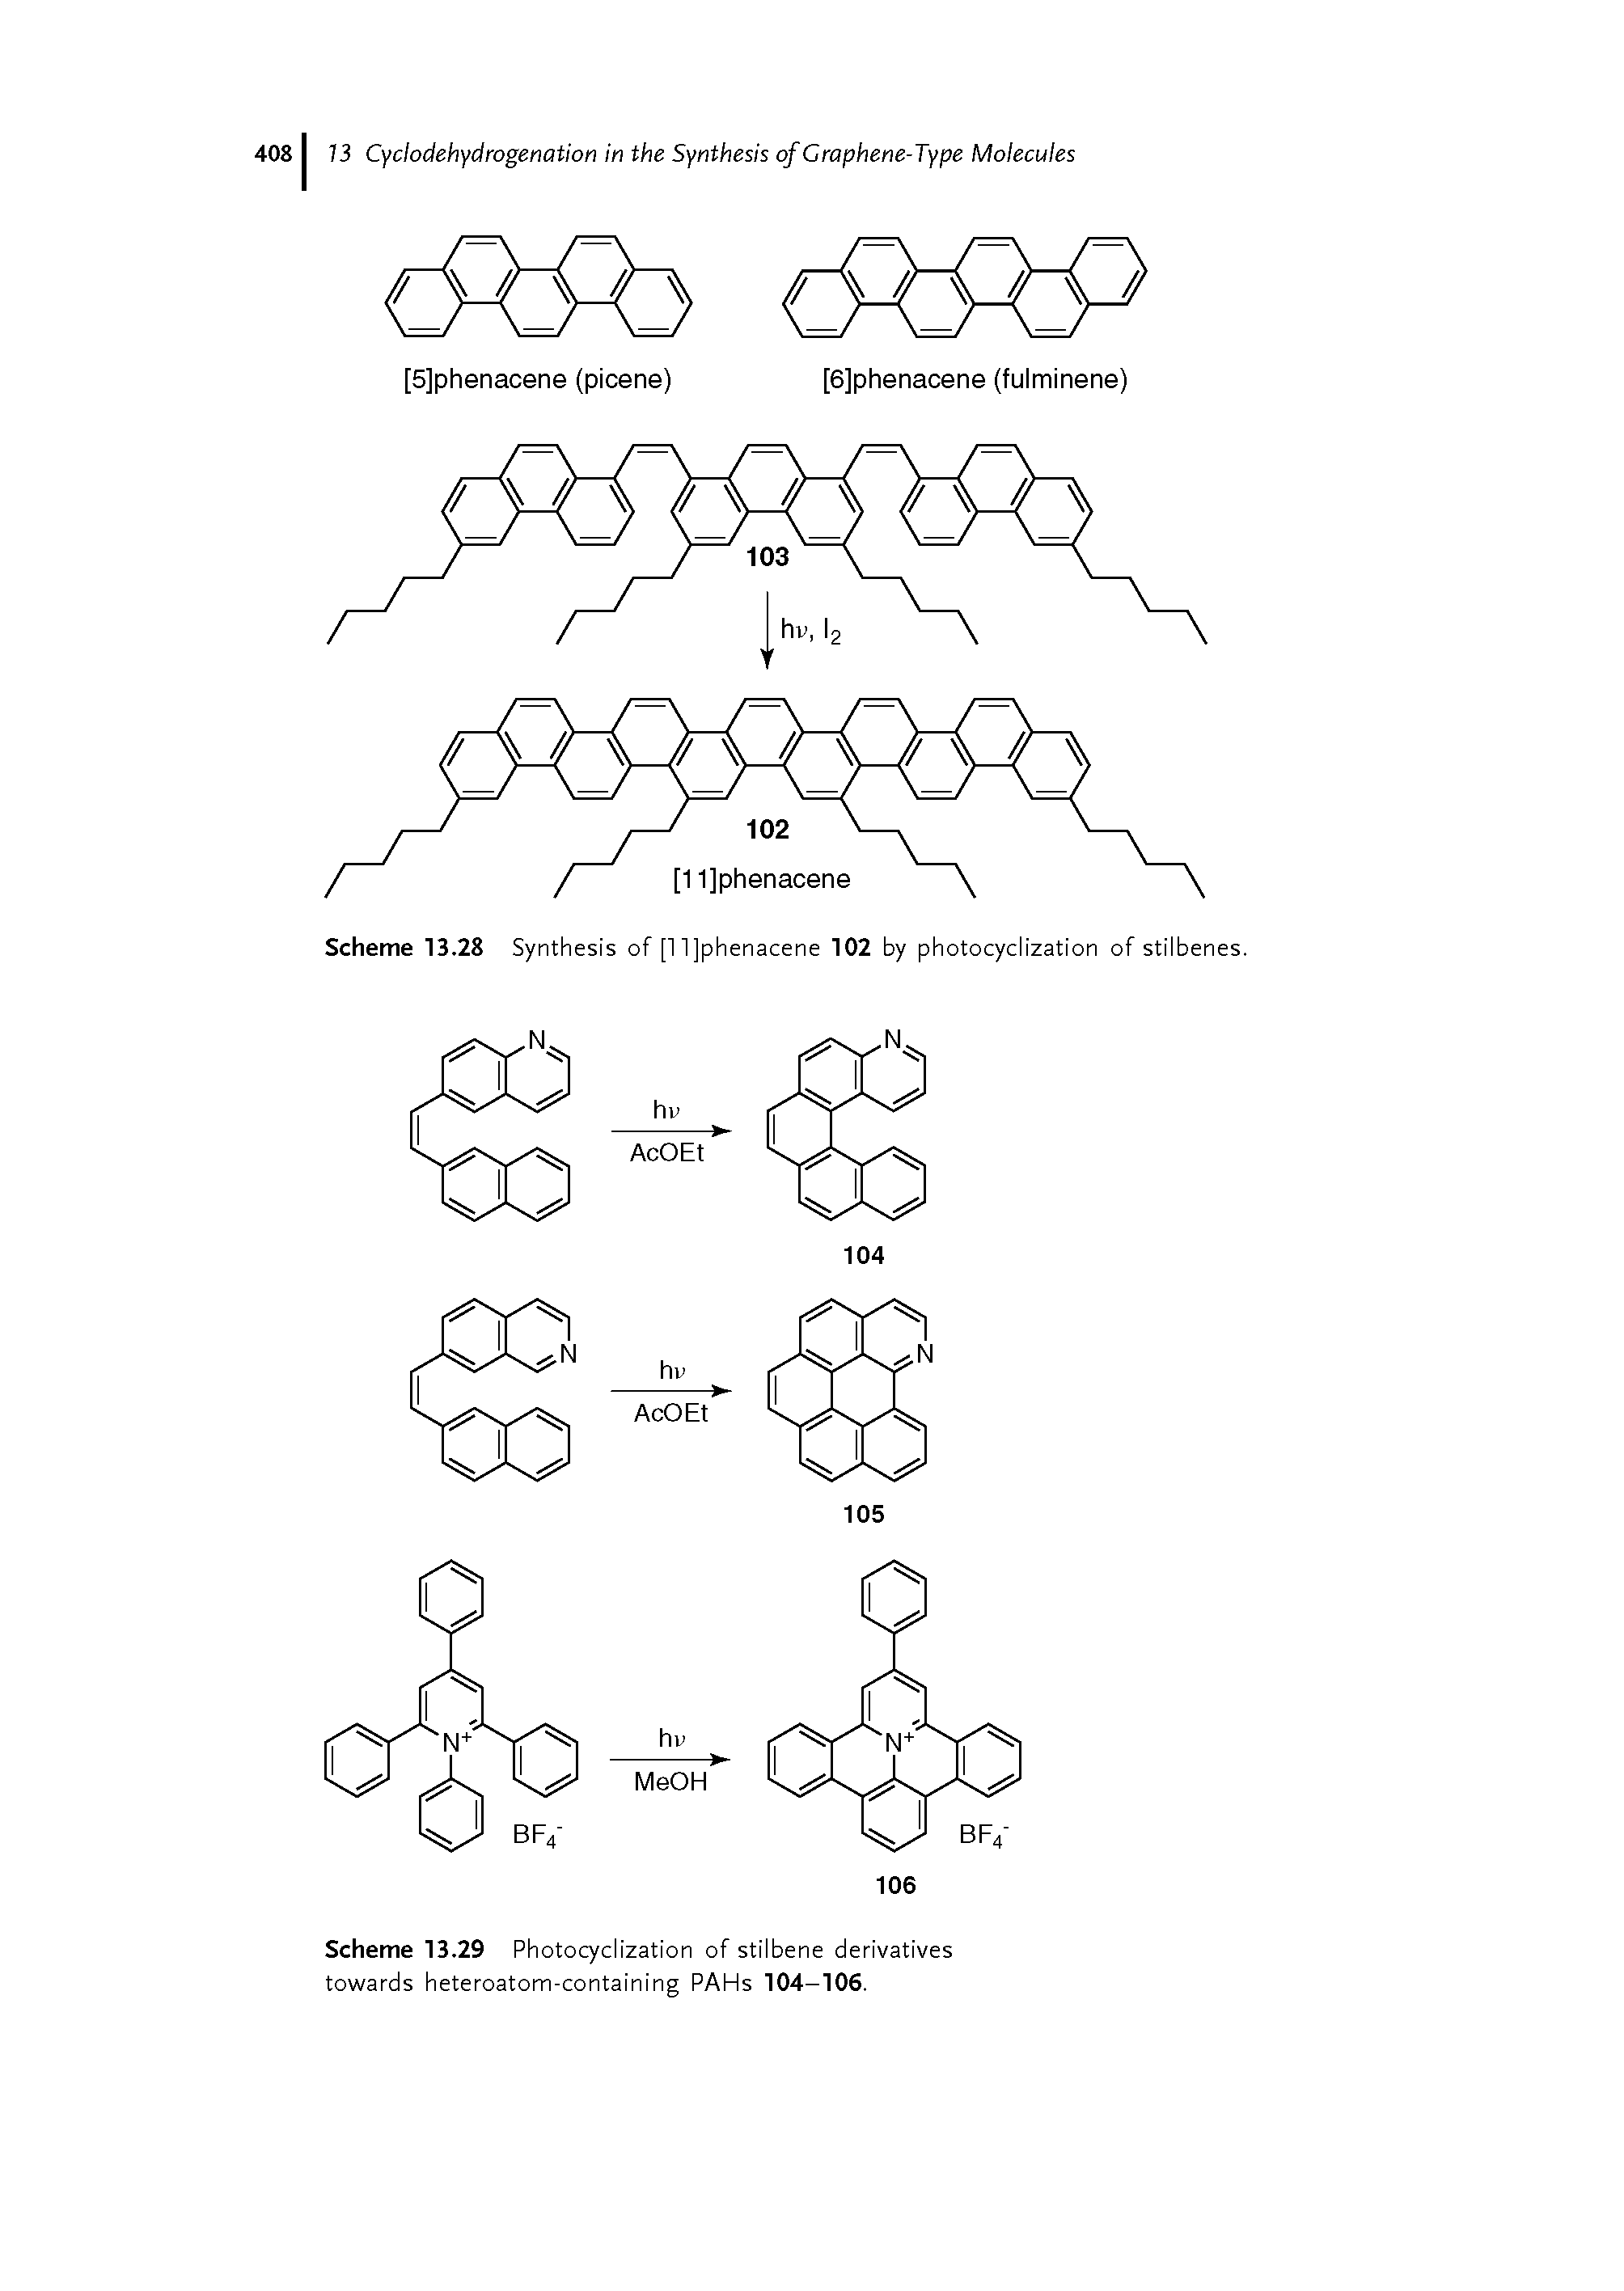 Scheme 13.29 Photocyclization of stilbene derivatives towards heteroatom-containing PAHs 104-106.